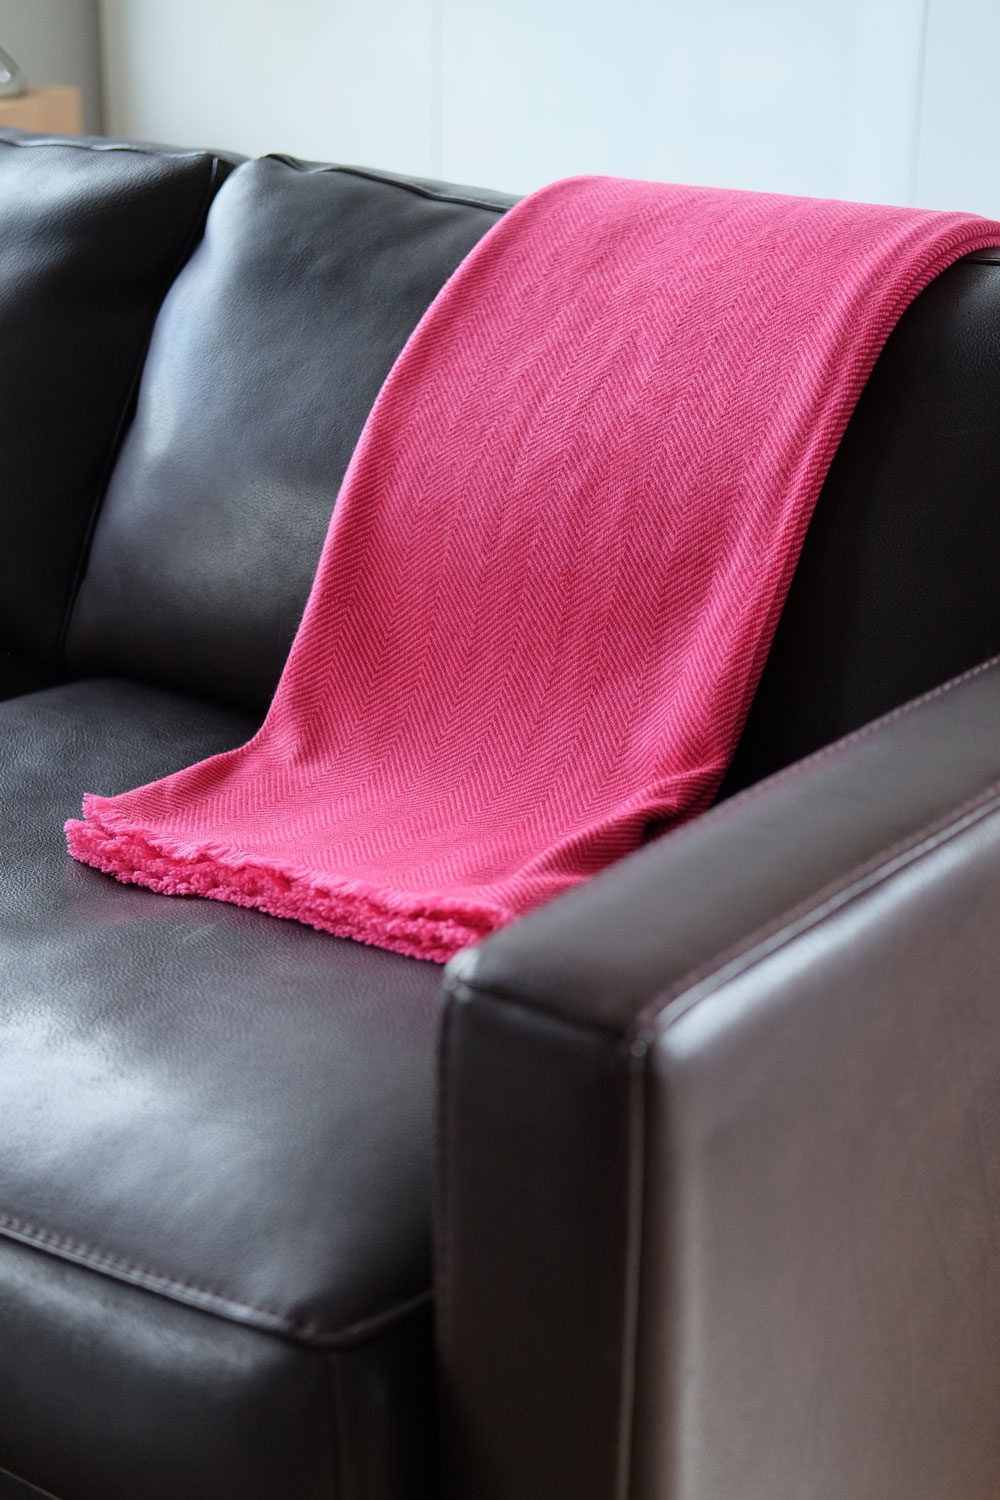 Cashmere cashmere donna erable 130 x 190 rosa shocking rosso rubino 130 x 190 cm